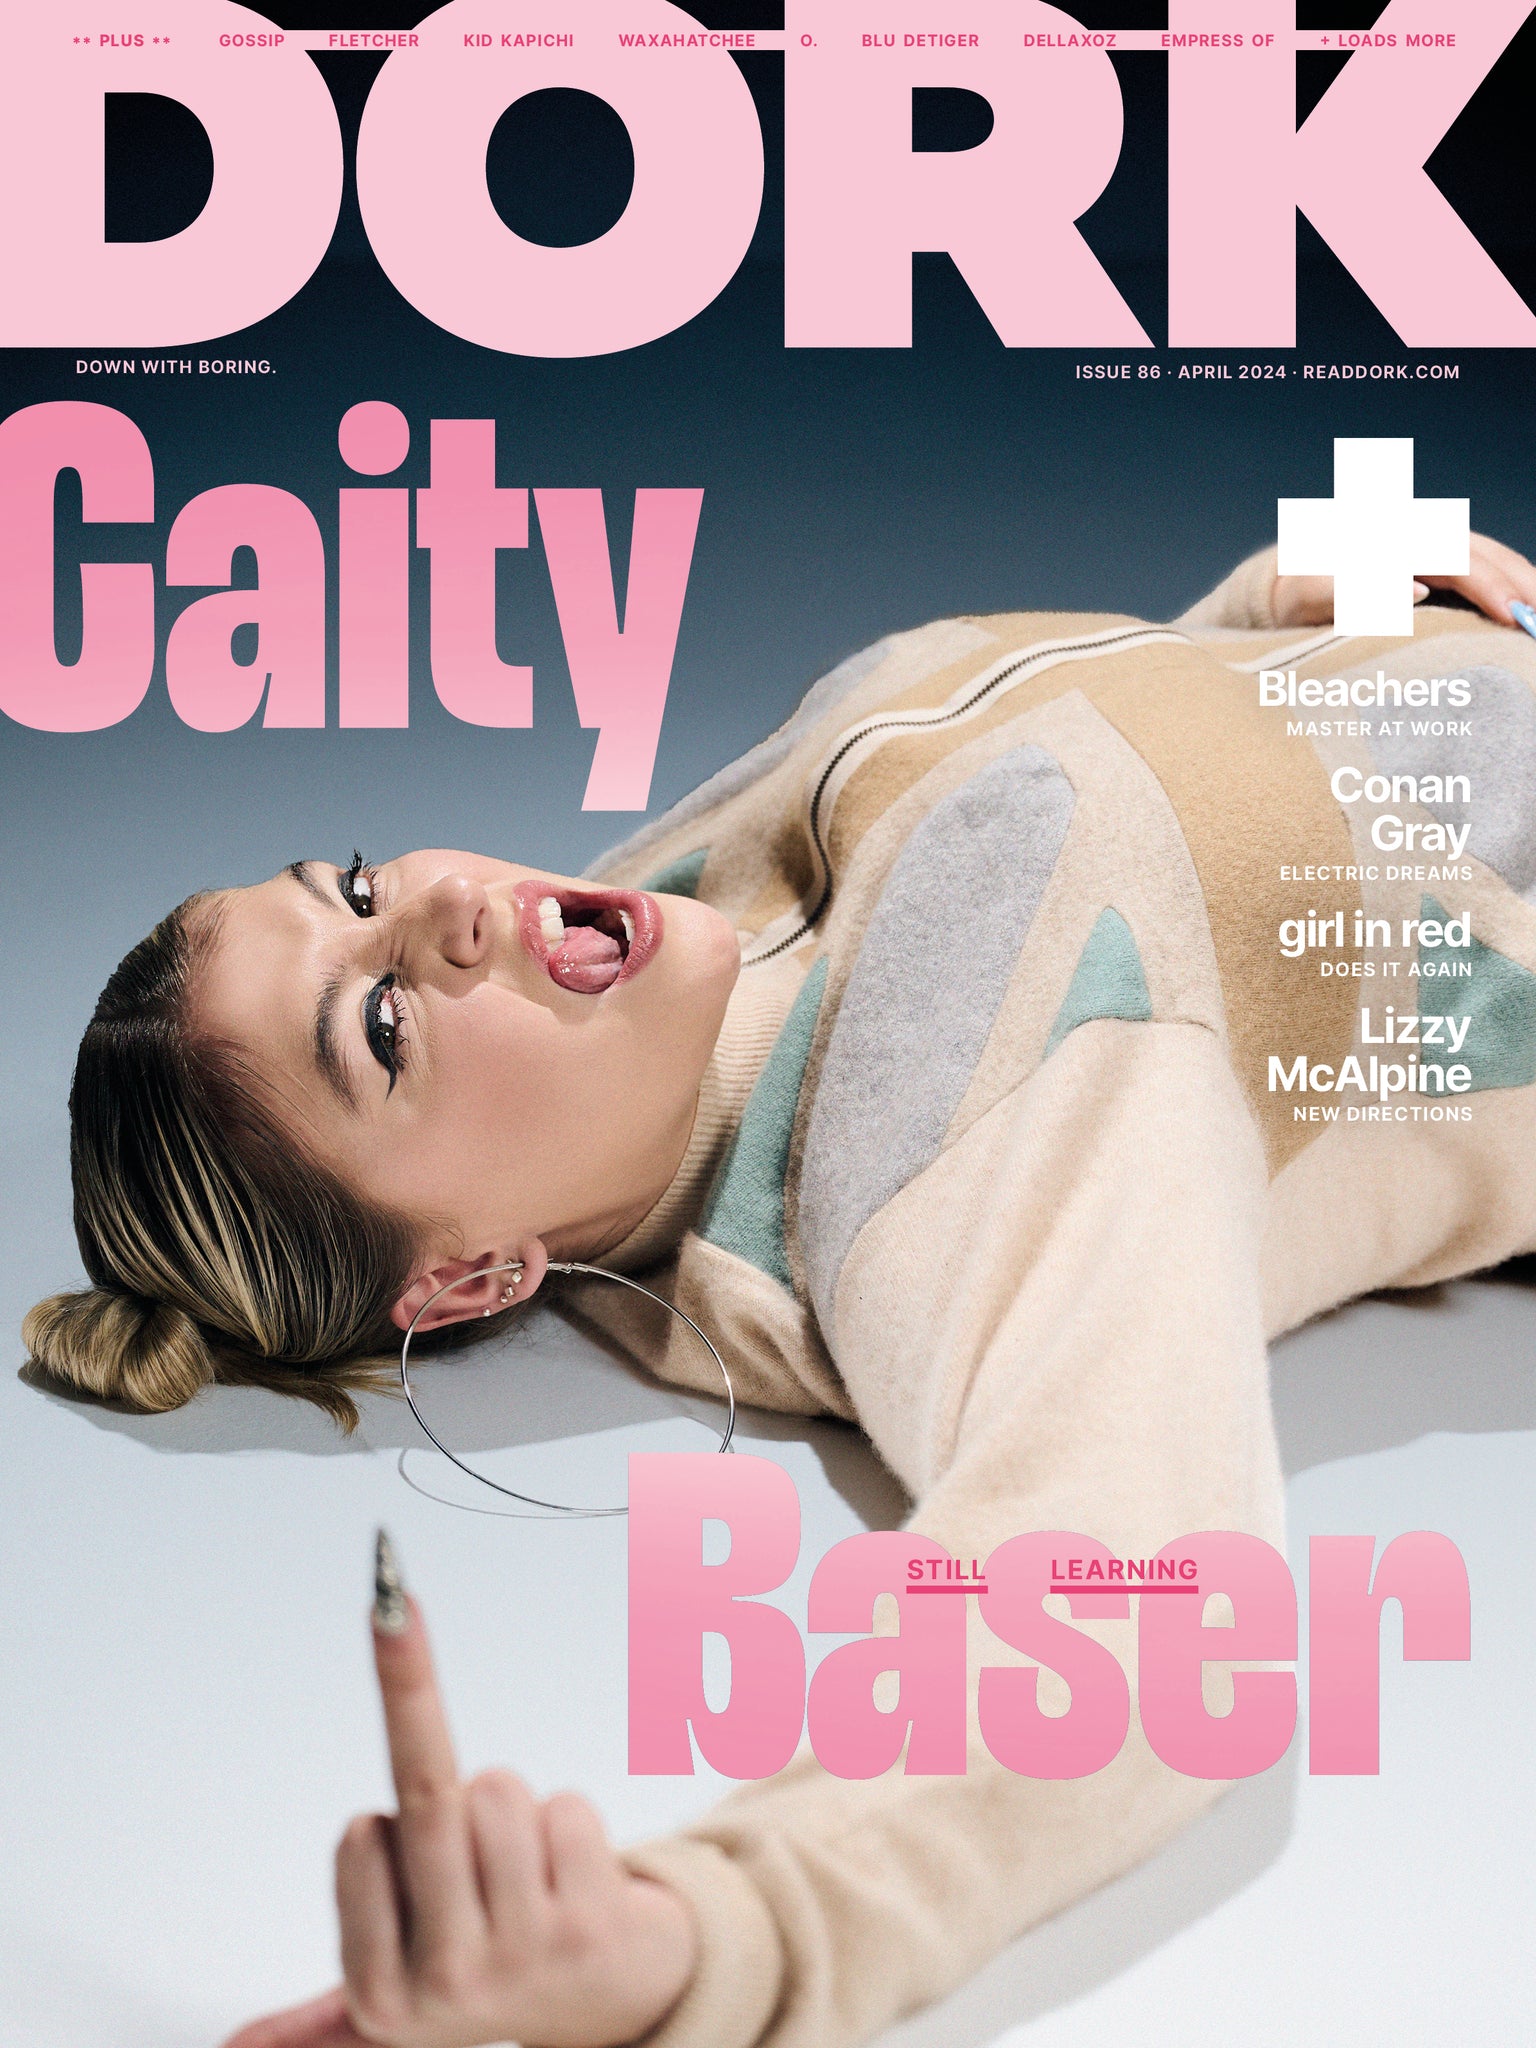 Dork, April 2024 (Caity Baser cover)